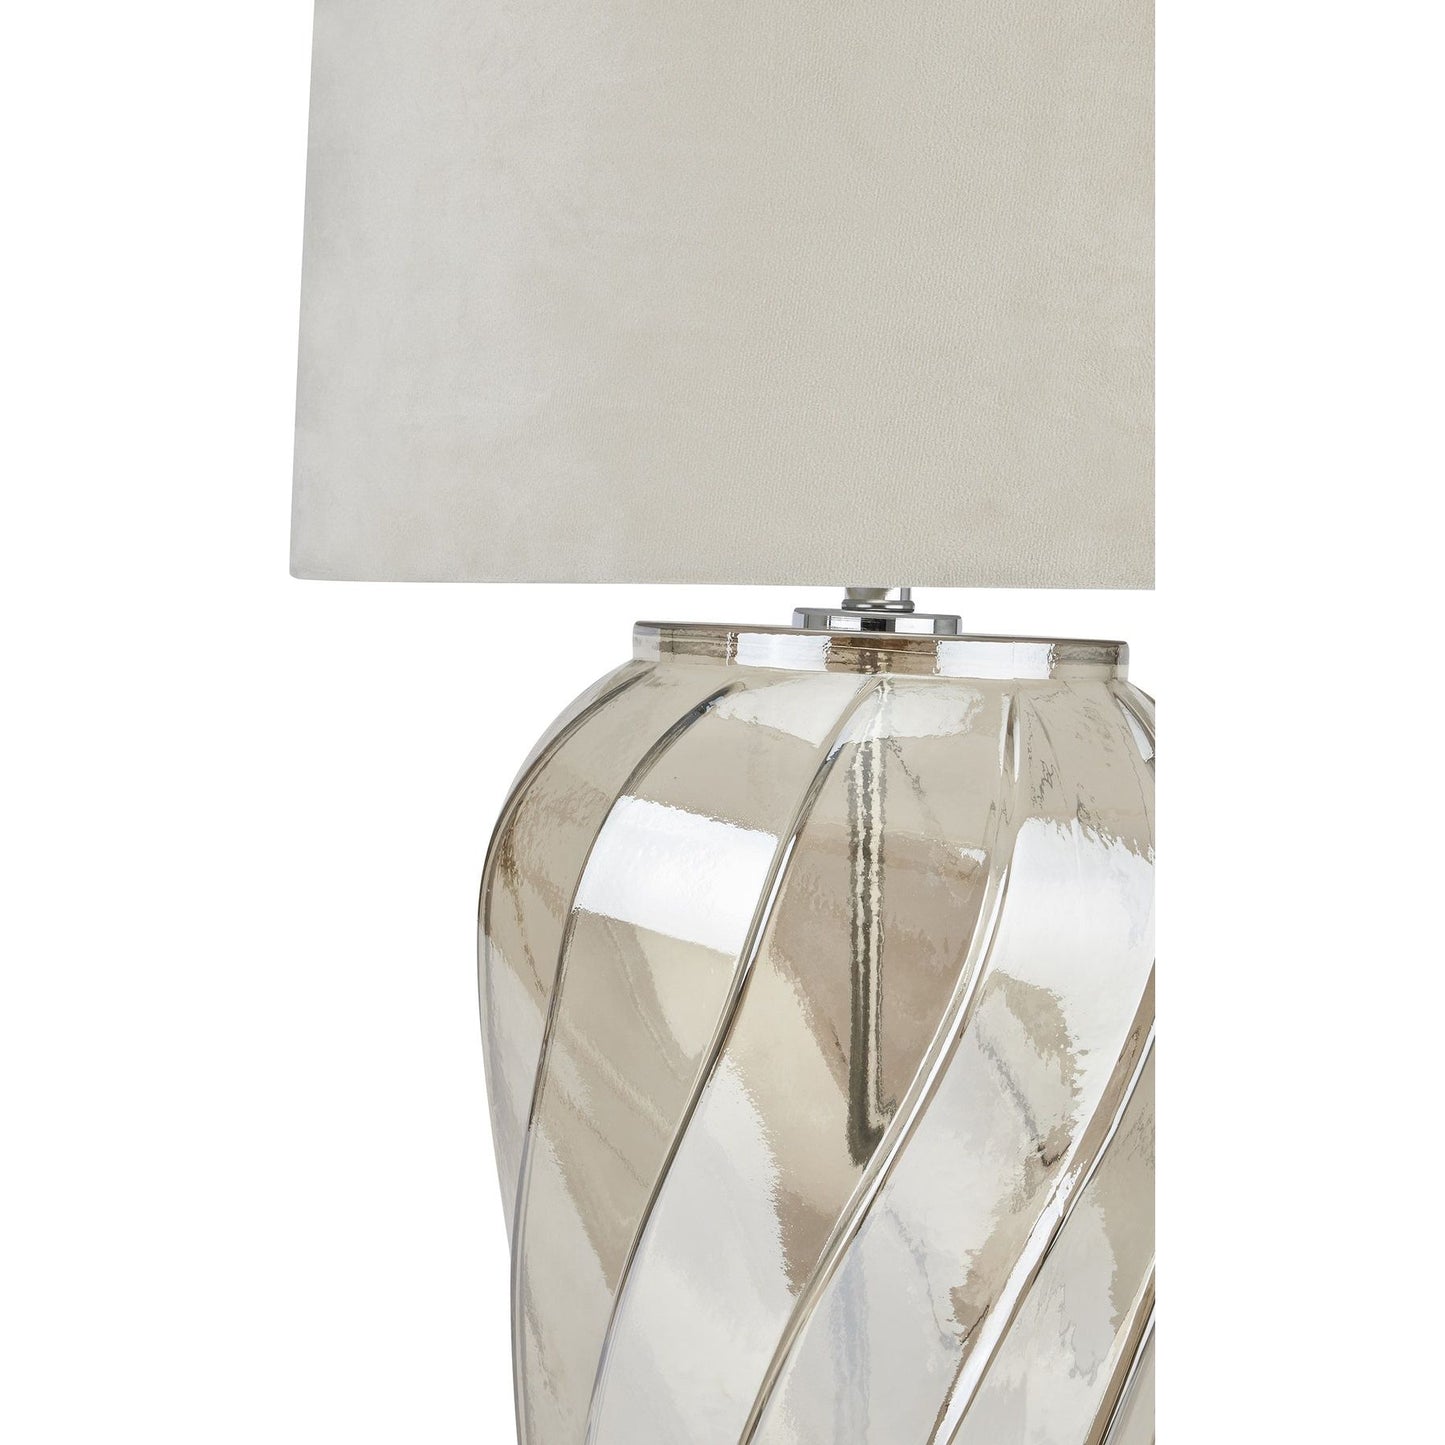 Ambassador Metallic Glass Lamp With Velvet Shade - Ashton and Finch